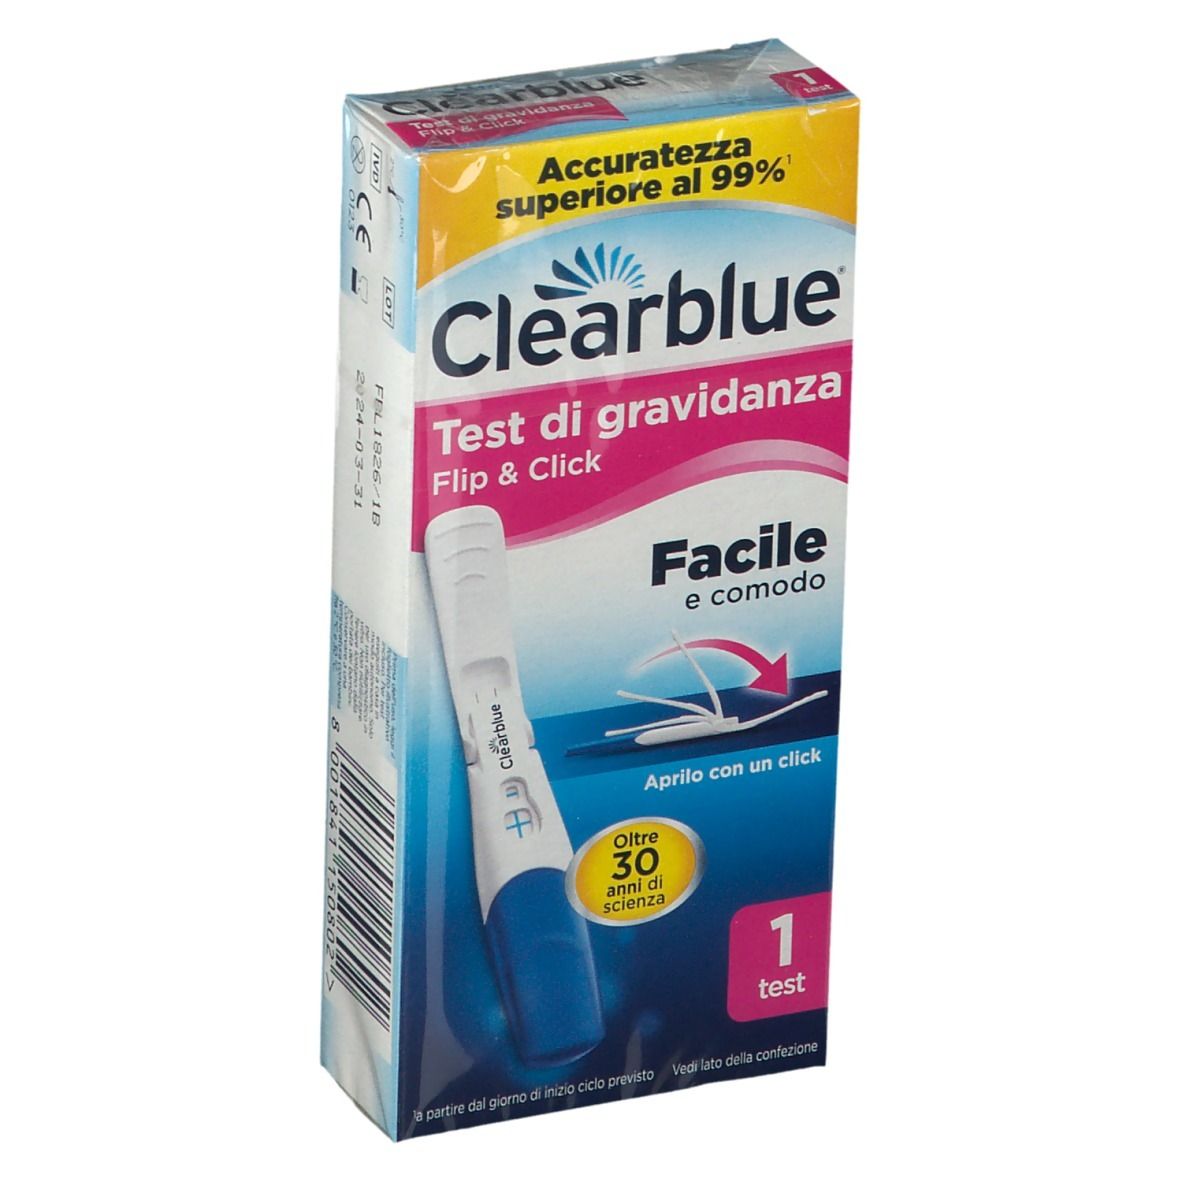 Clearblue® Test di Gravidanza Flip & Click